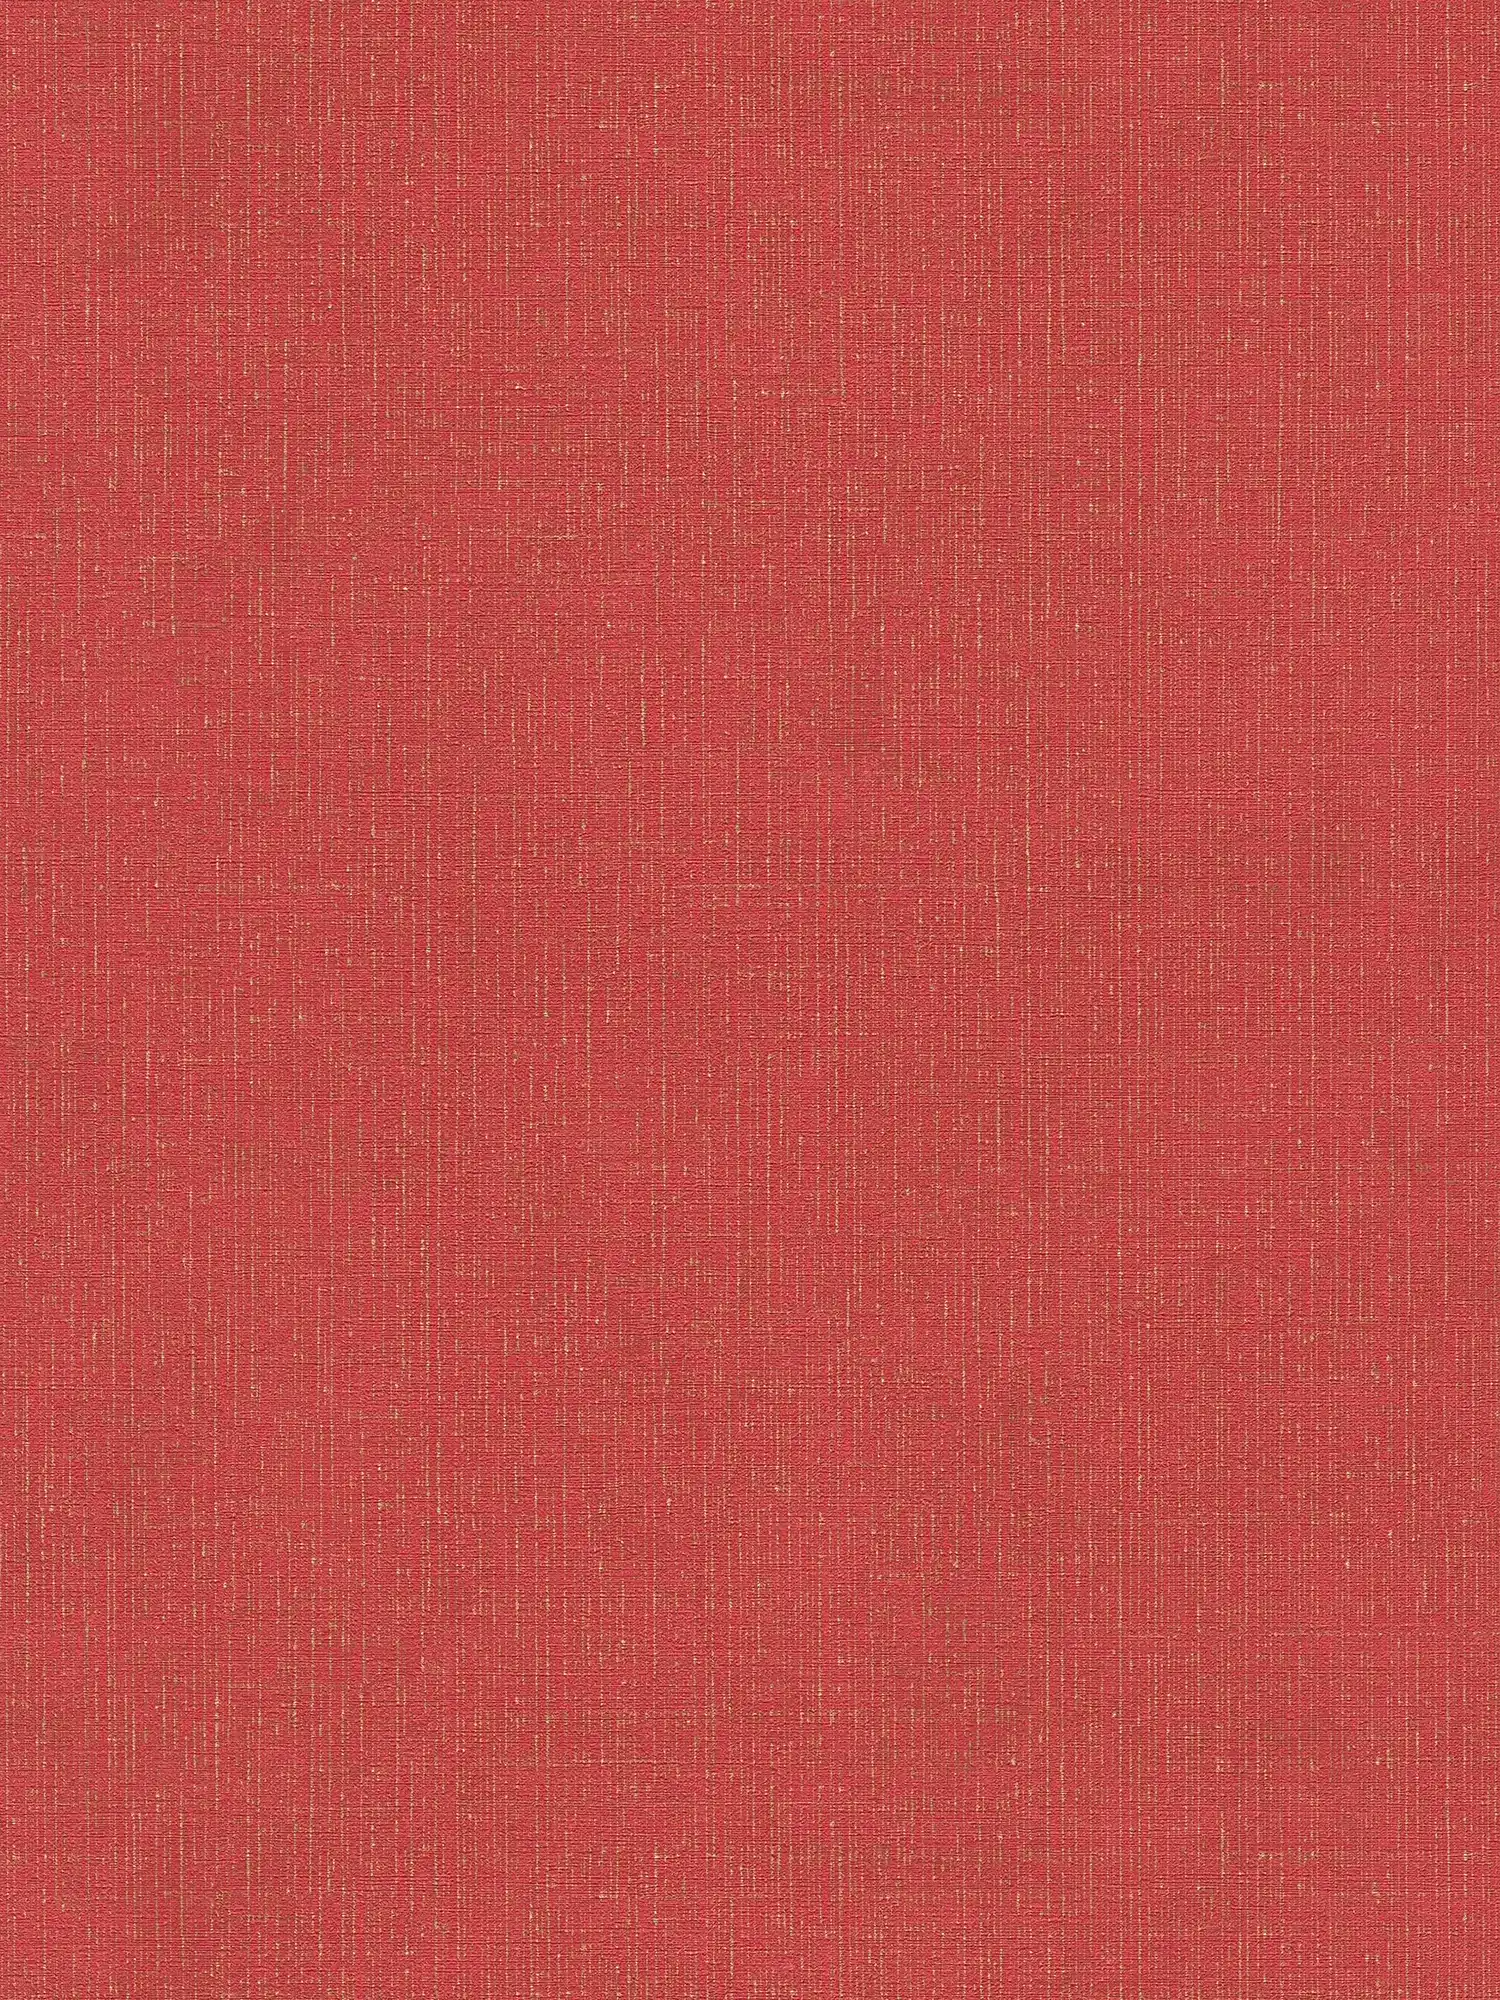 Rote Tapete golden Meliert mit Textiloptik – Metallic, Rot
